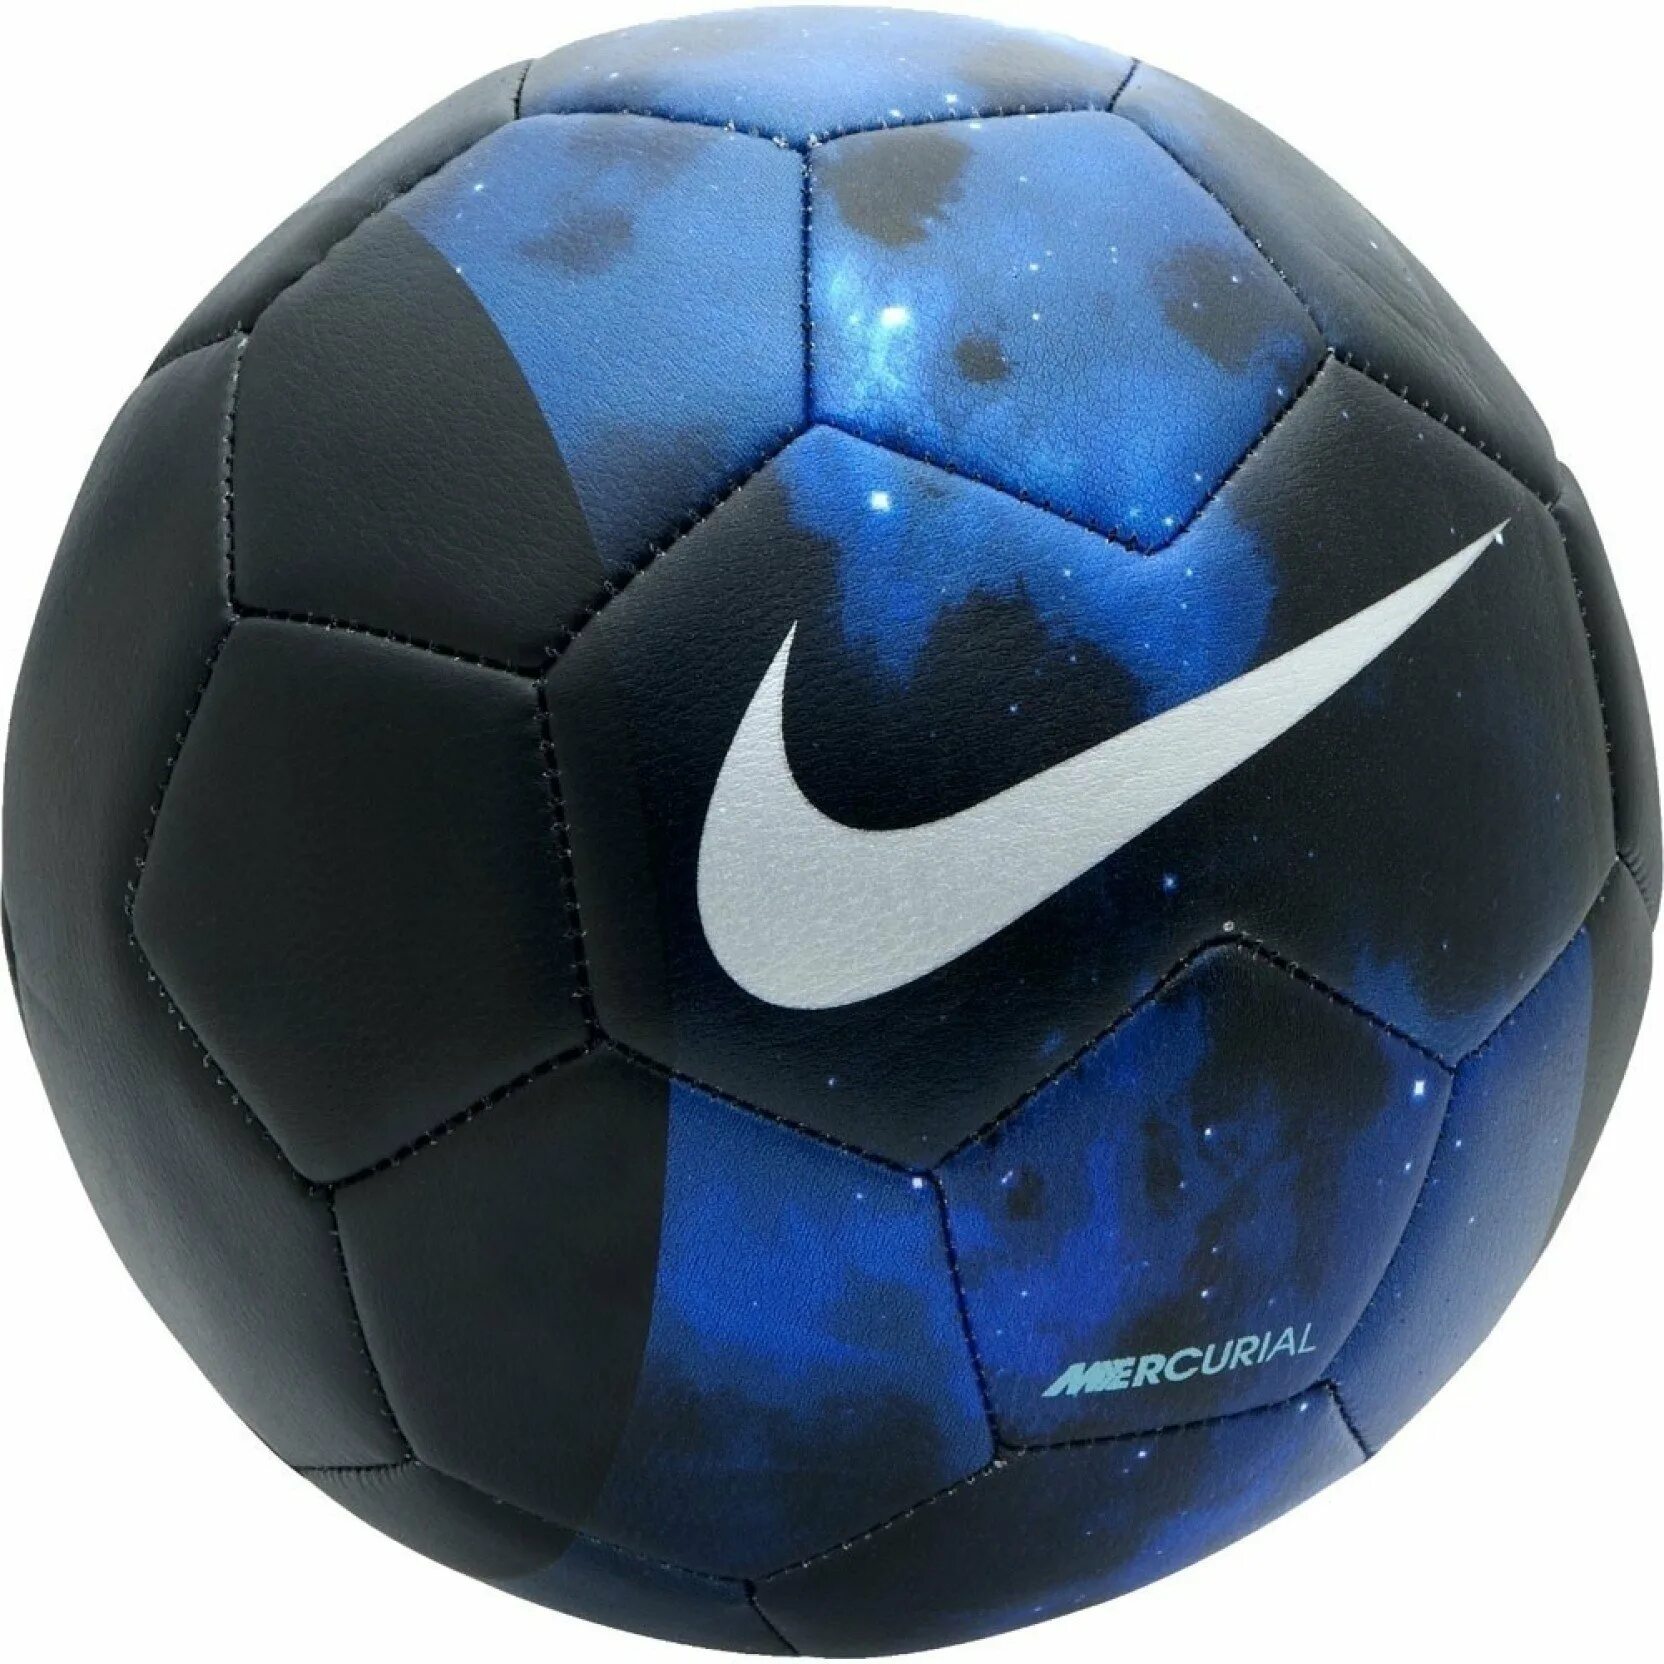 Мяч футбольный Nike cr7 Prestige sc2320-440. Футбольный мяч Pnantom Nike cr7. Мяч футбольный Nike cr7 синий. Мяч футбольный Nike cr7 Prestige sc2782-636. Мячи футбольные москва